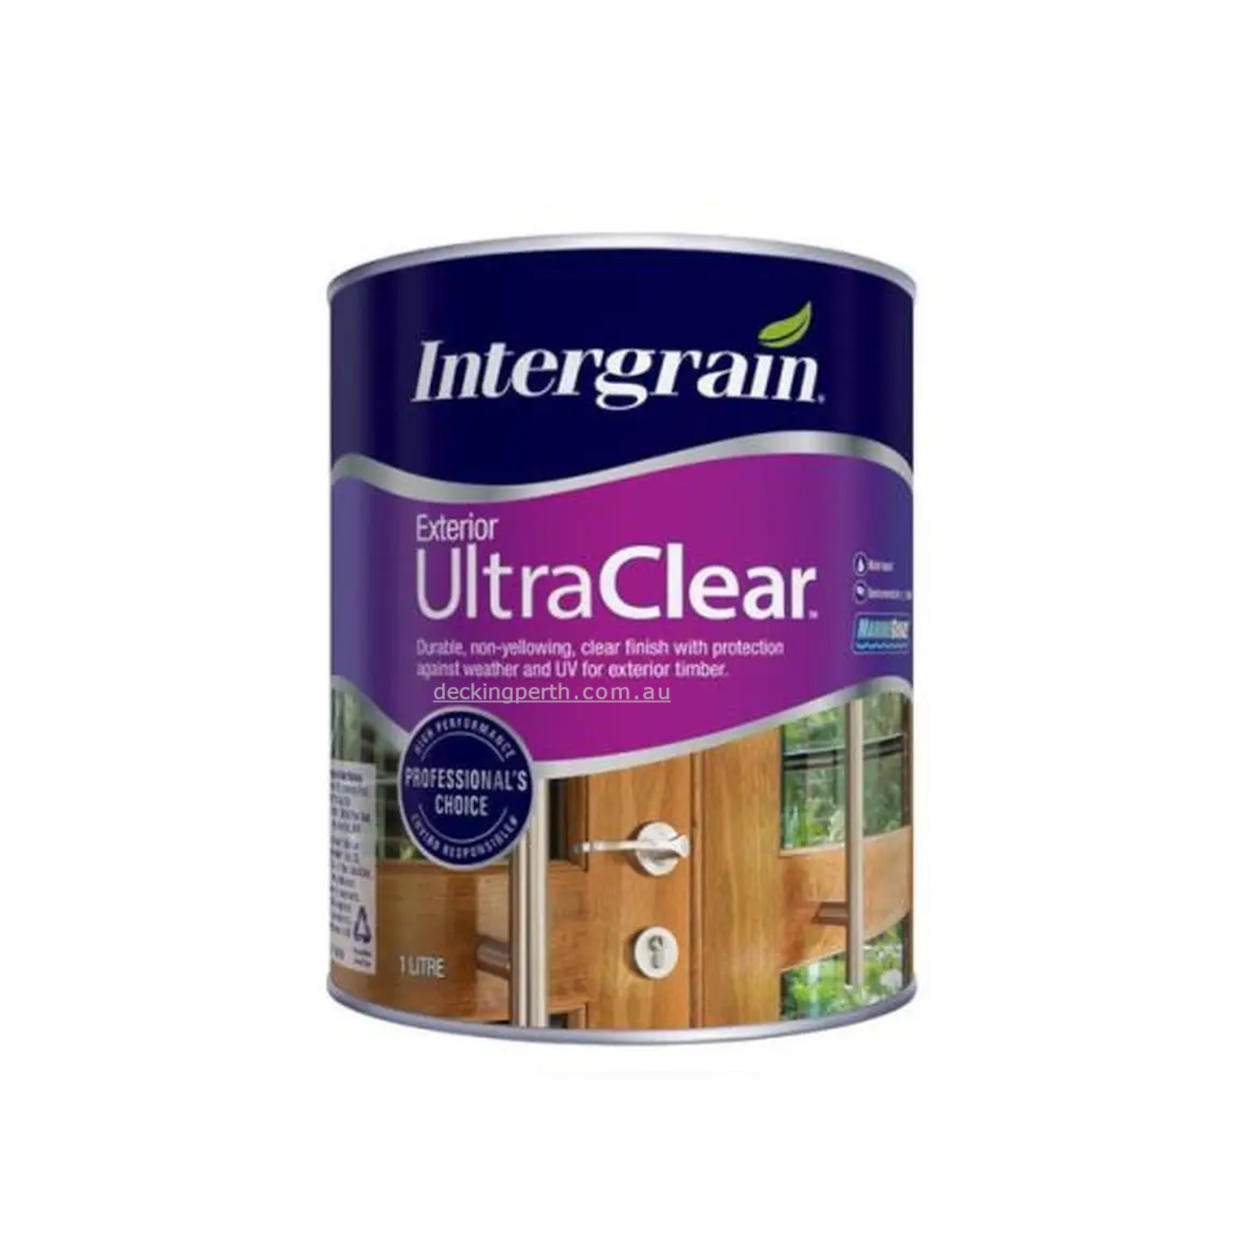 Intergrain_UltraClear_1_Litre_Decking_Perth